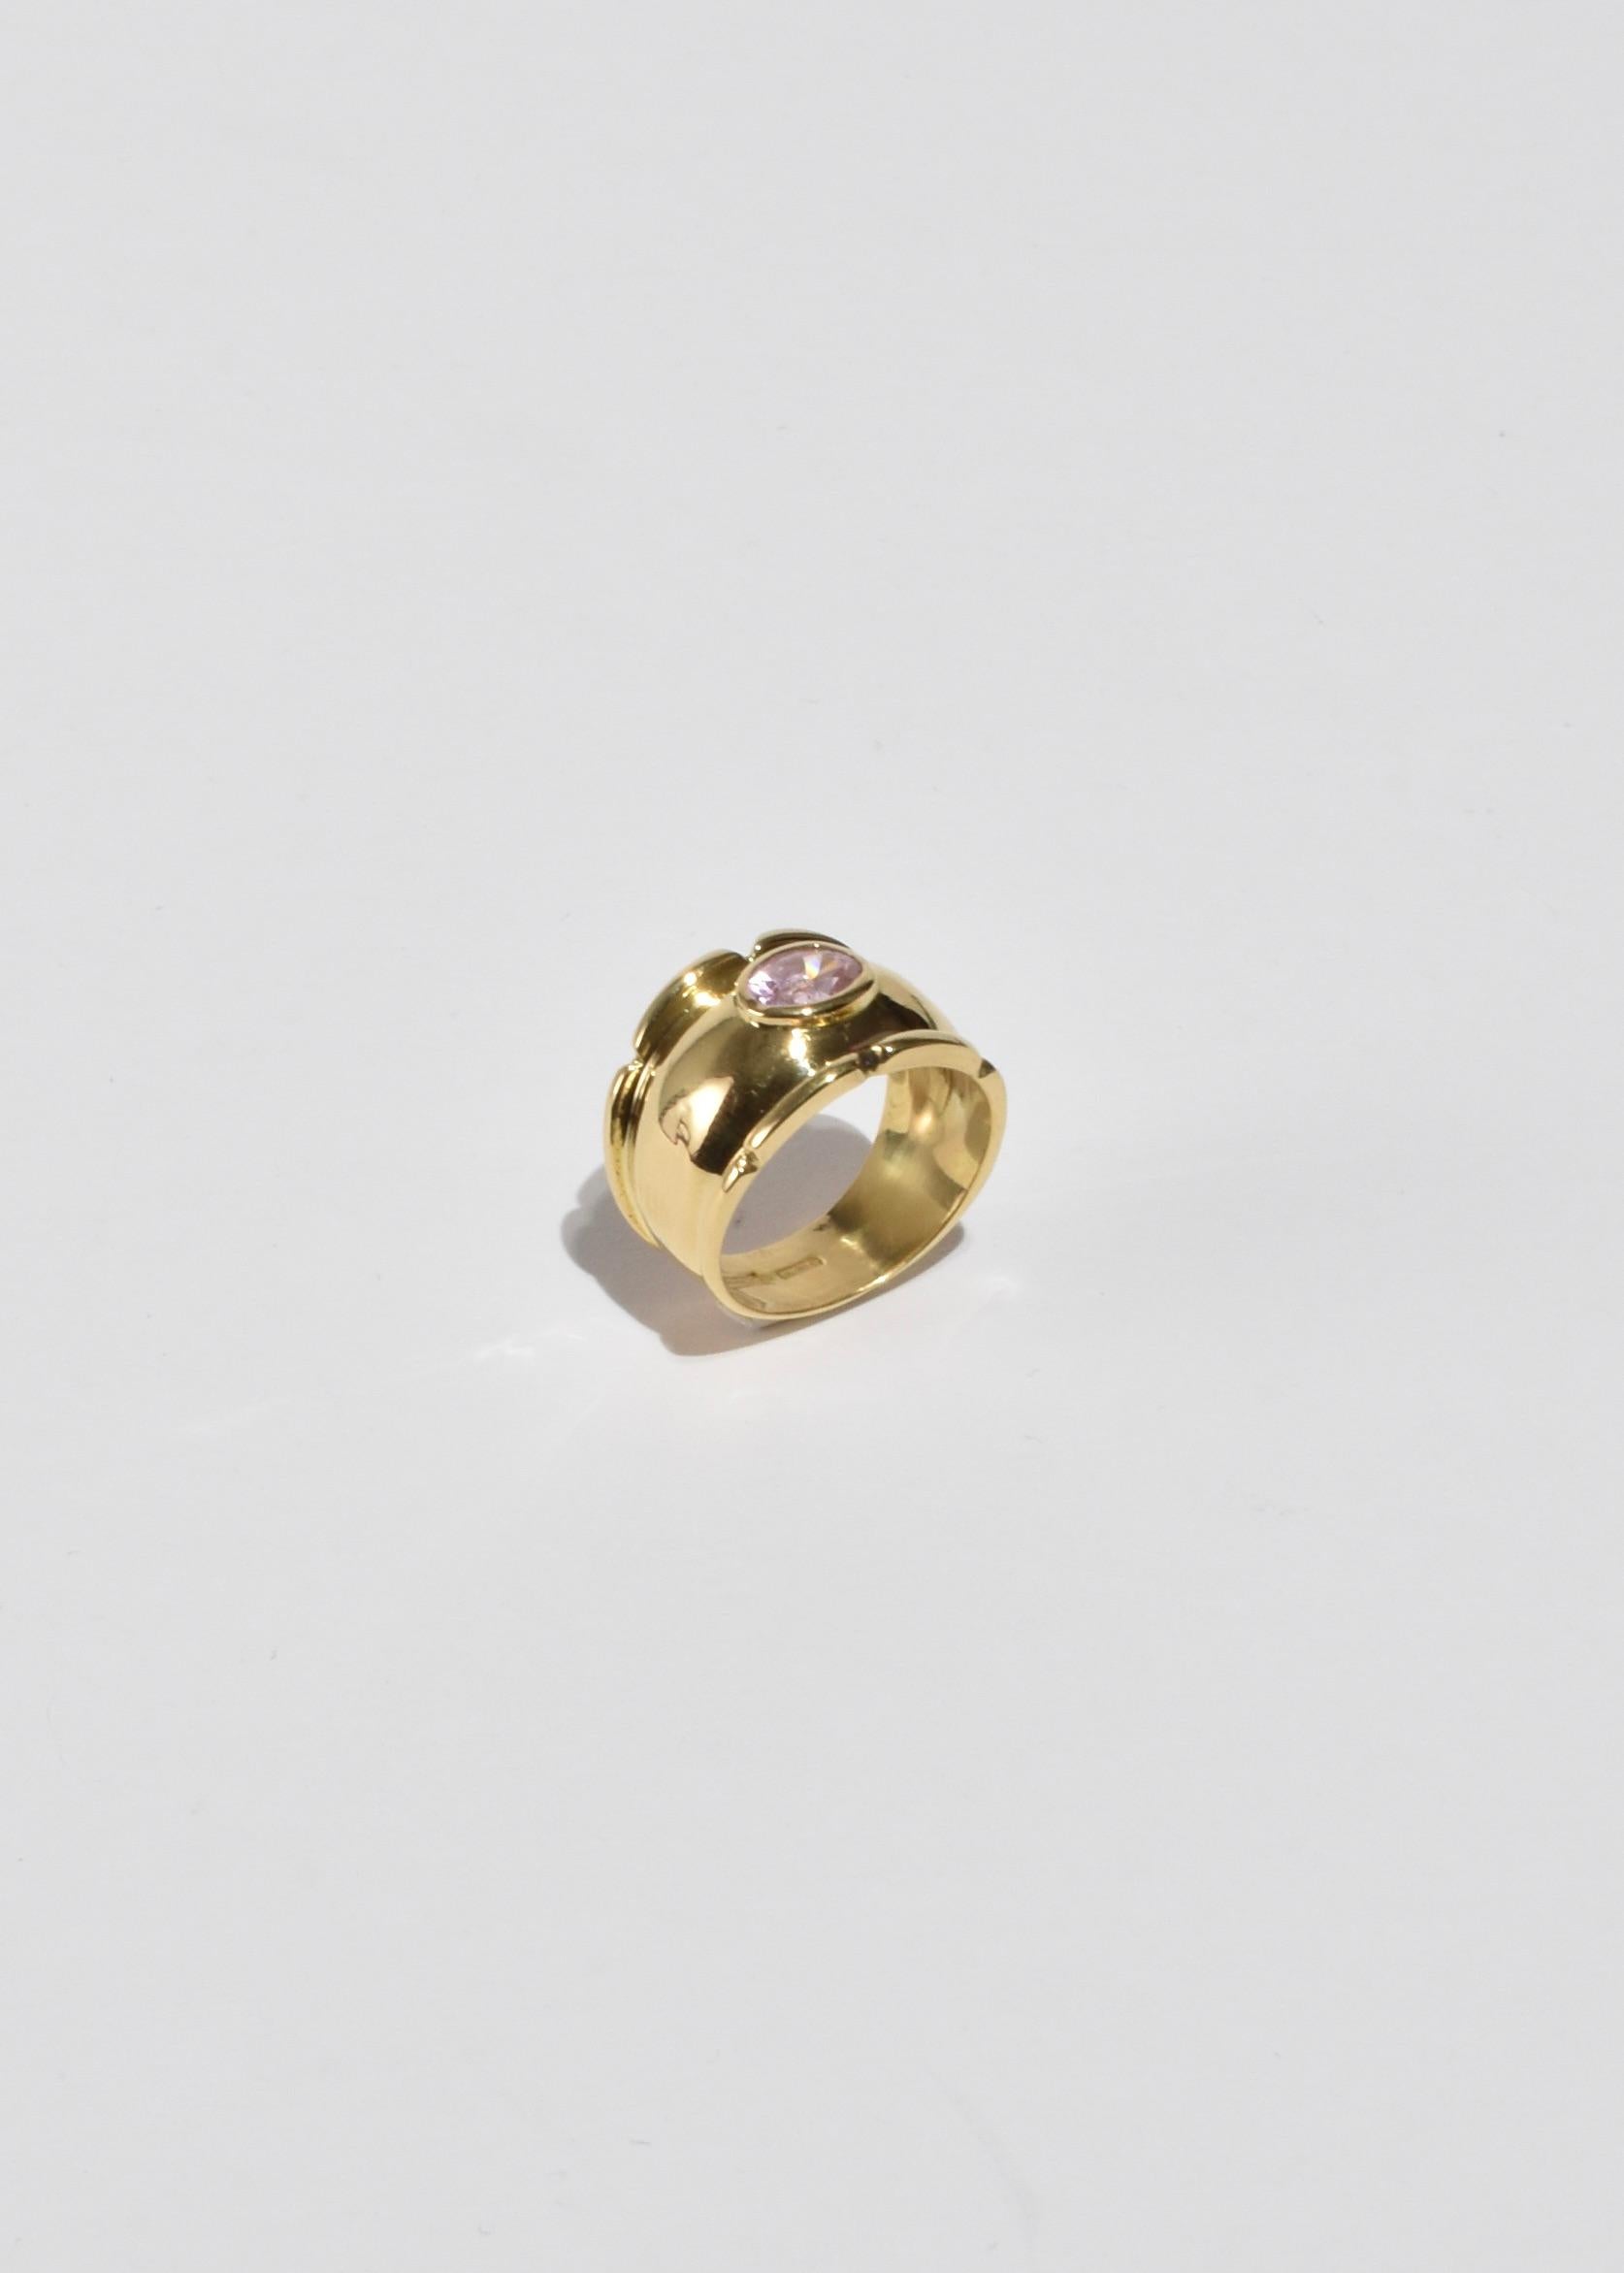 Gold Rose Quartz Ring In Excellent Condition For Sale In Richmond, VA